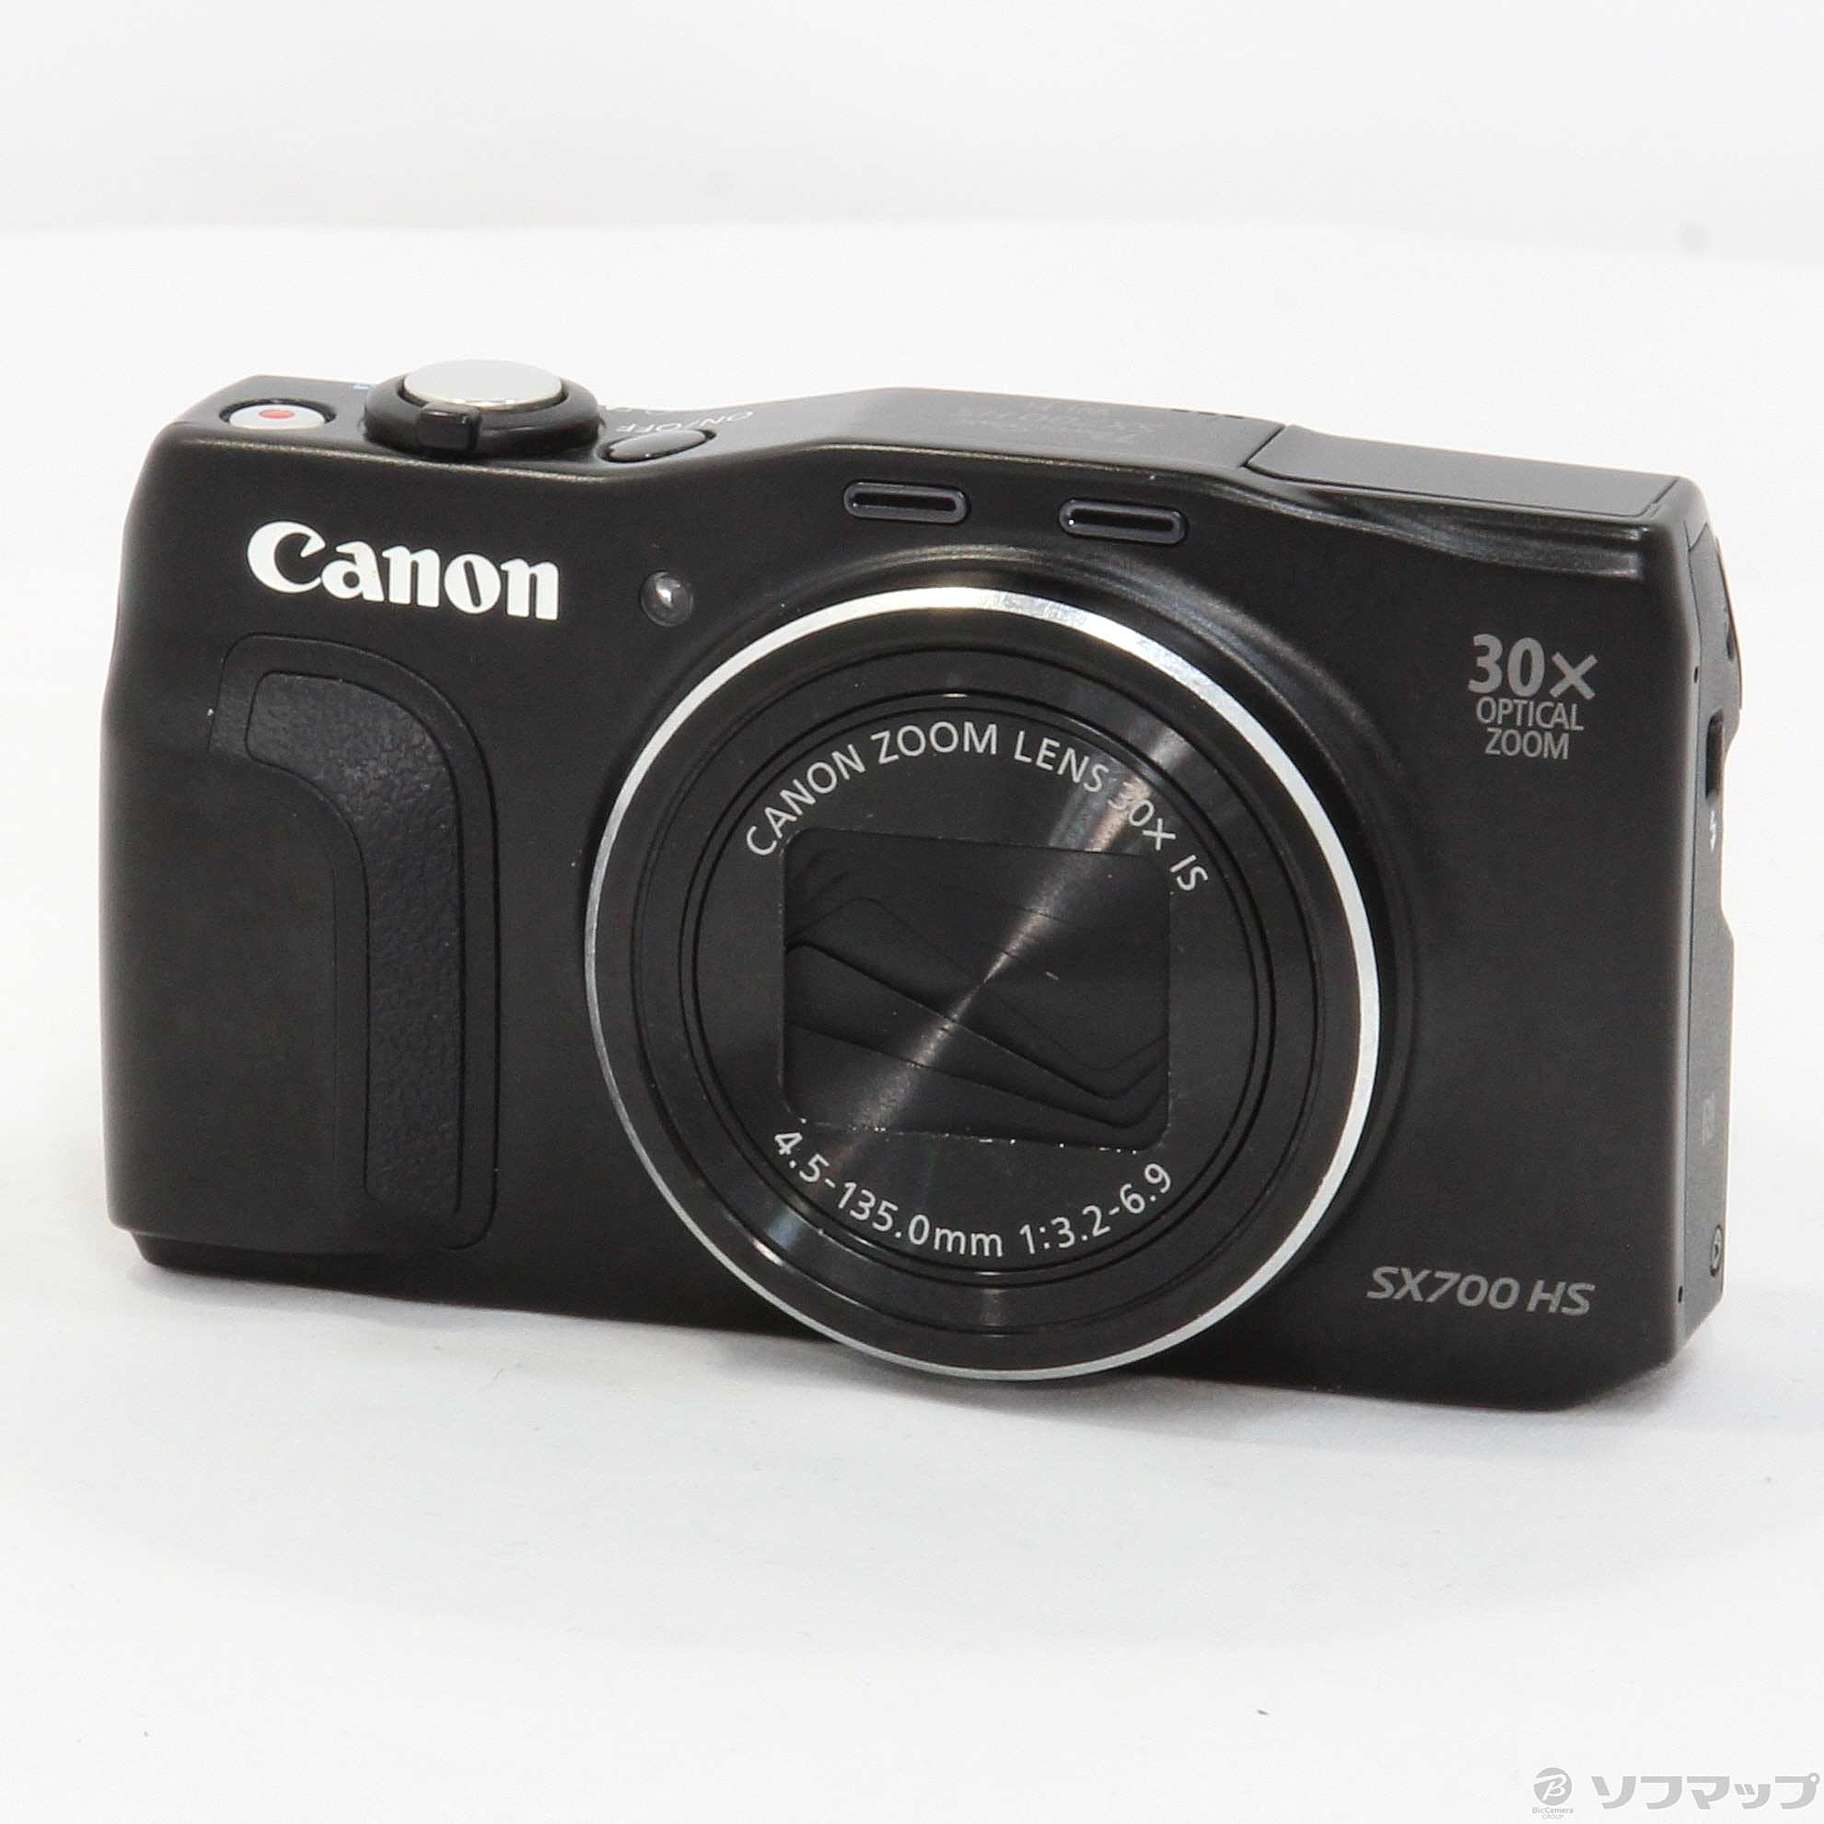 Black Canon PowerShot SX700 HS Digital Camera 